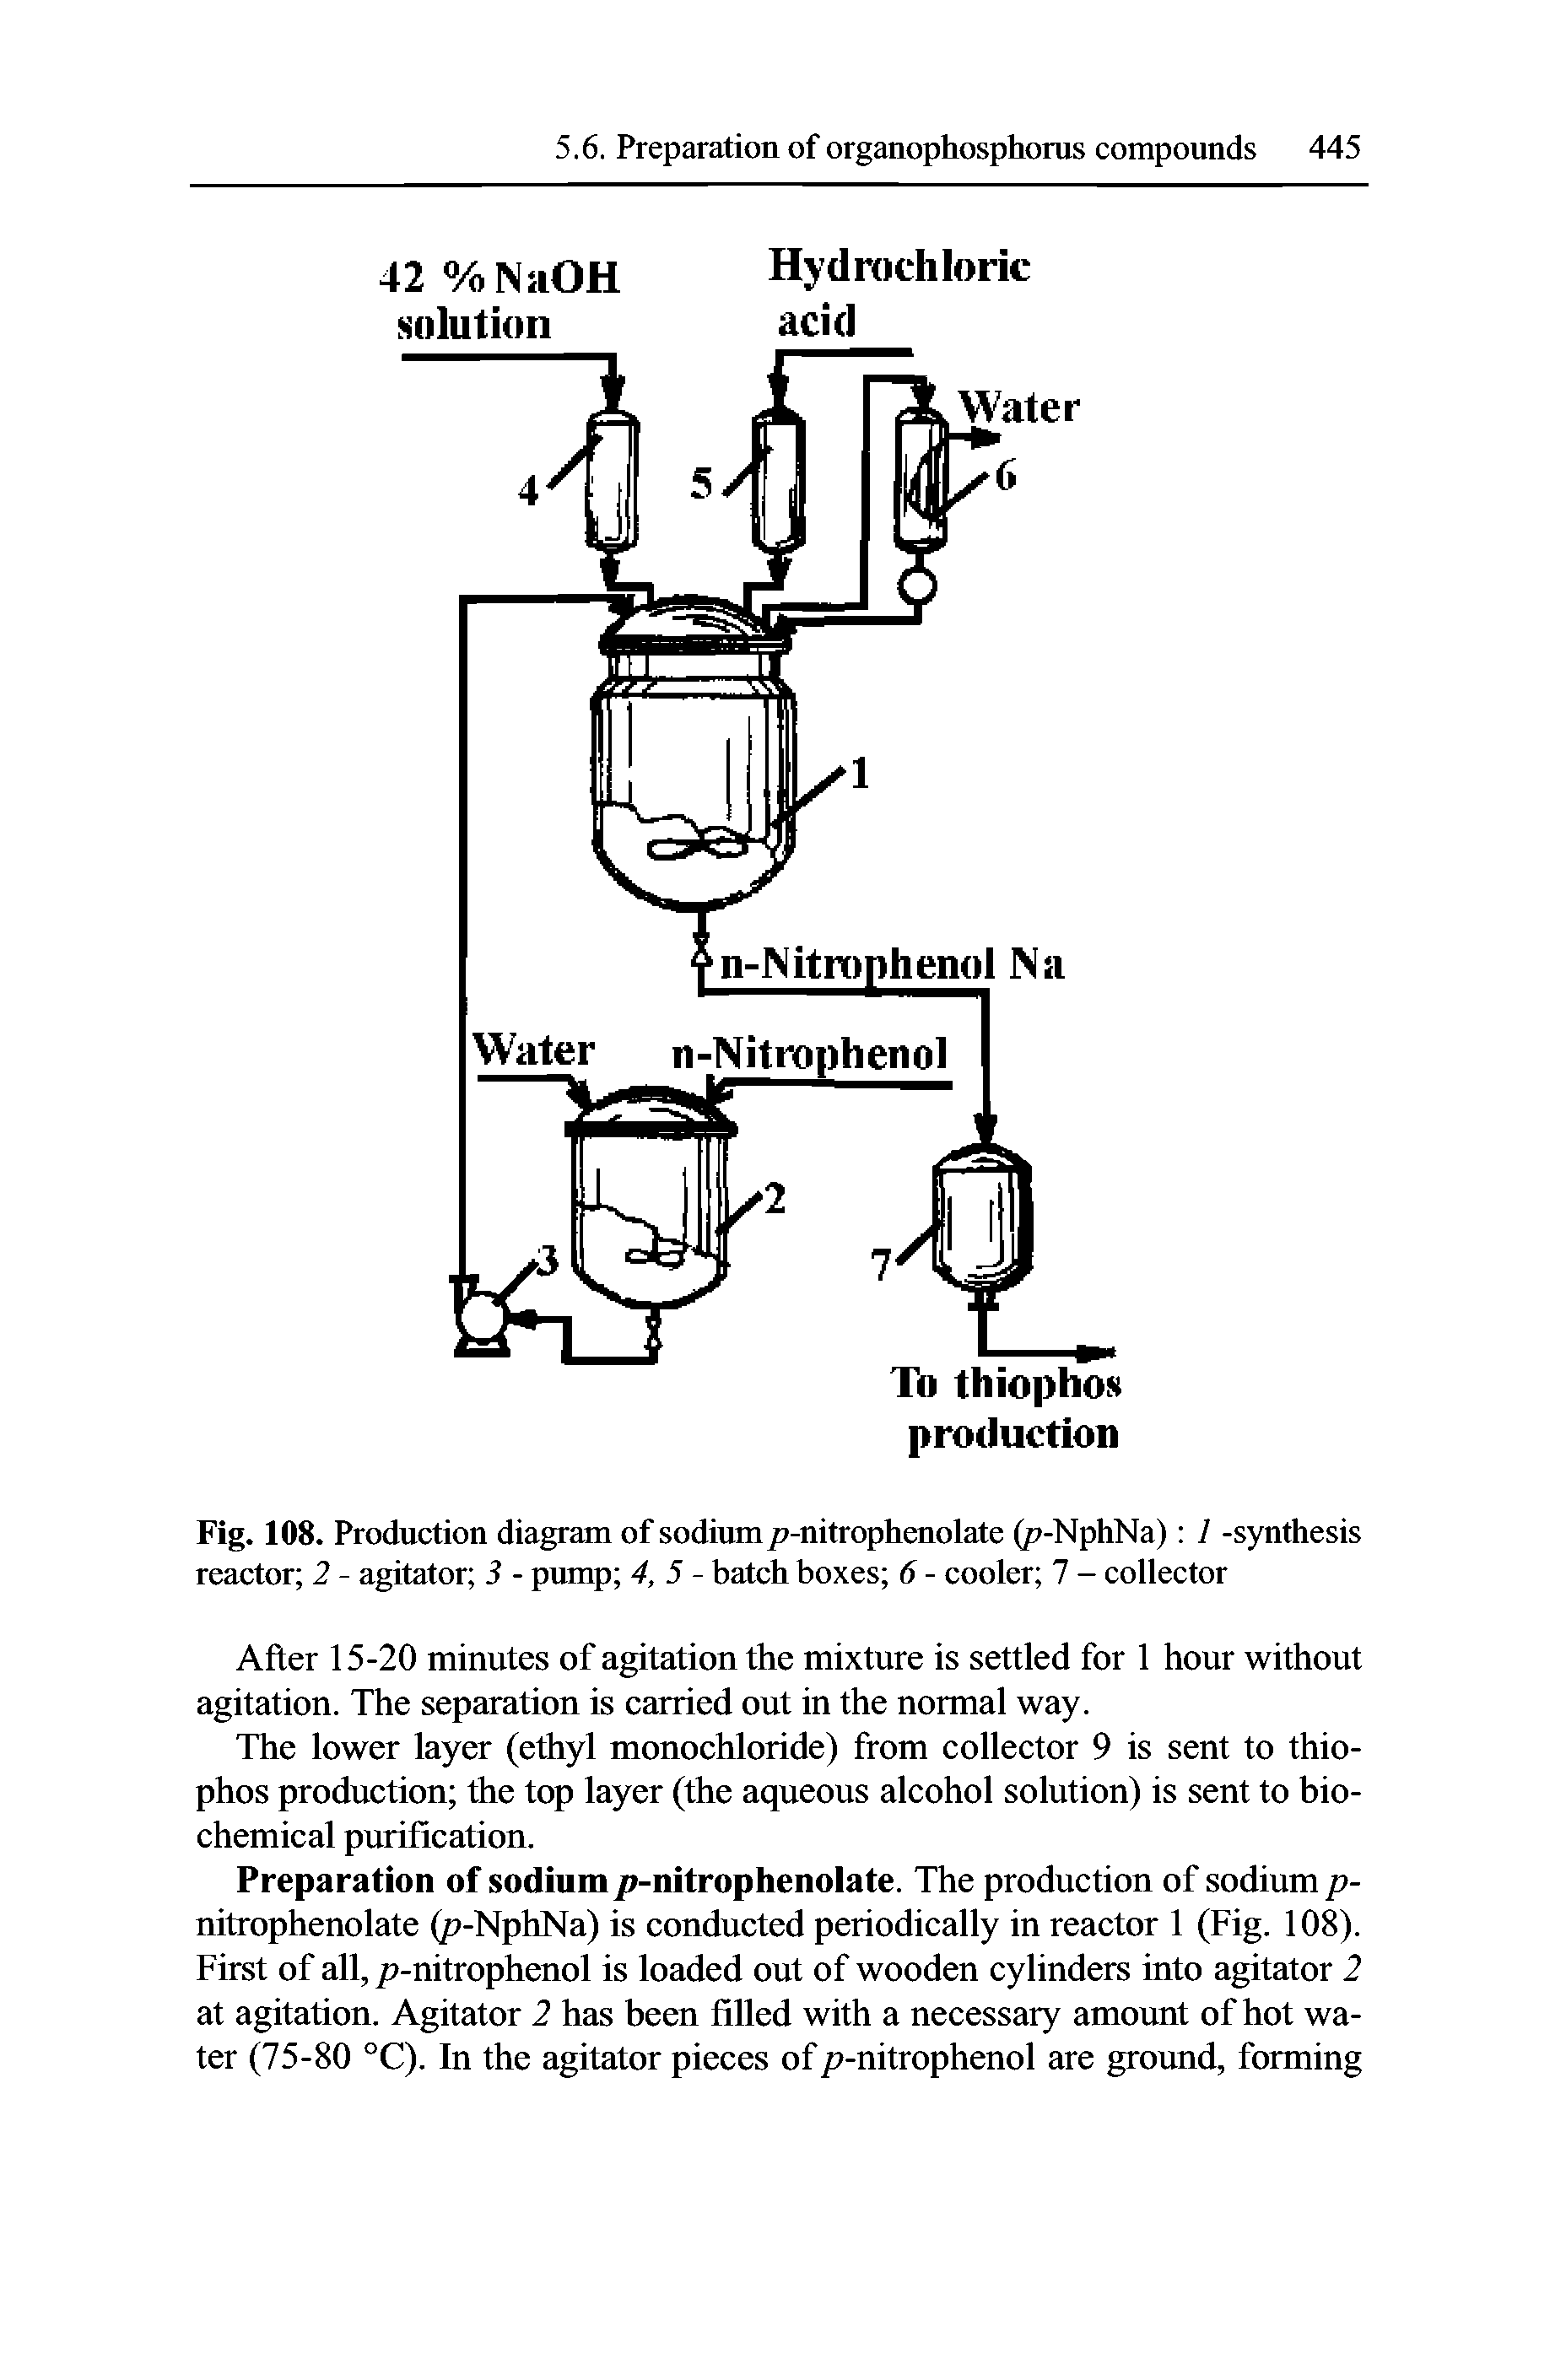 Fig. 108. Production diagram of sodium /j-nitrophcnolatc (/ -NphNa) 1 -synthesis reactor 2 - agitator 3 - pump 4, 5 - batch boxes 6 - cooler 7 - collector...